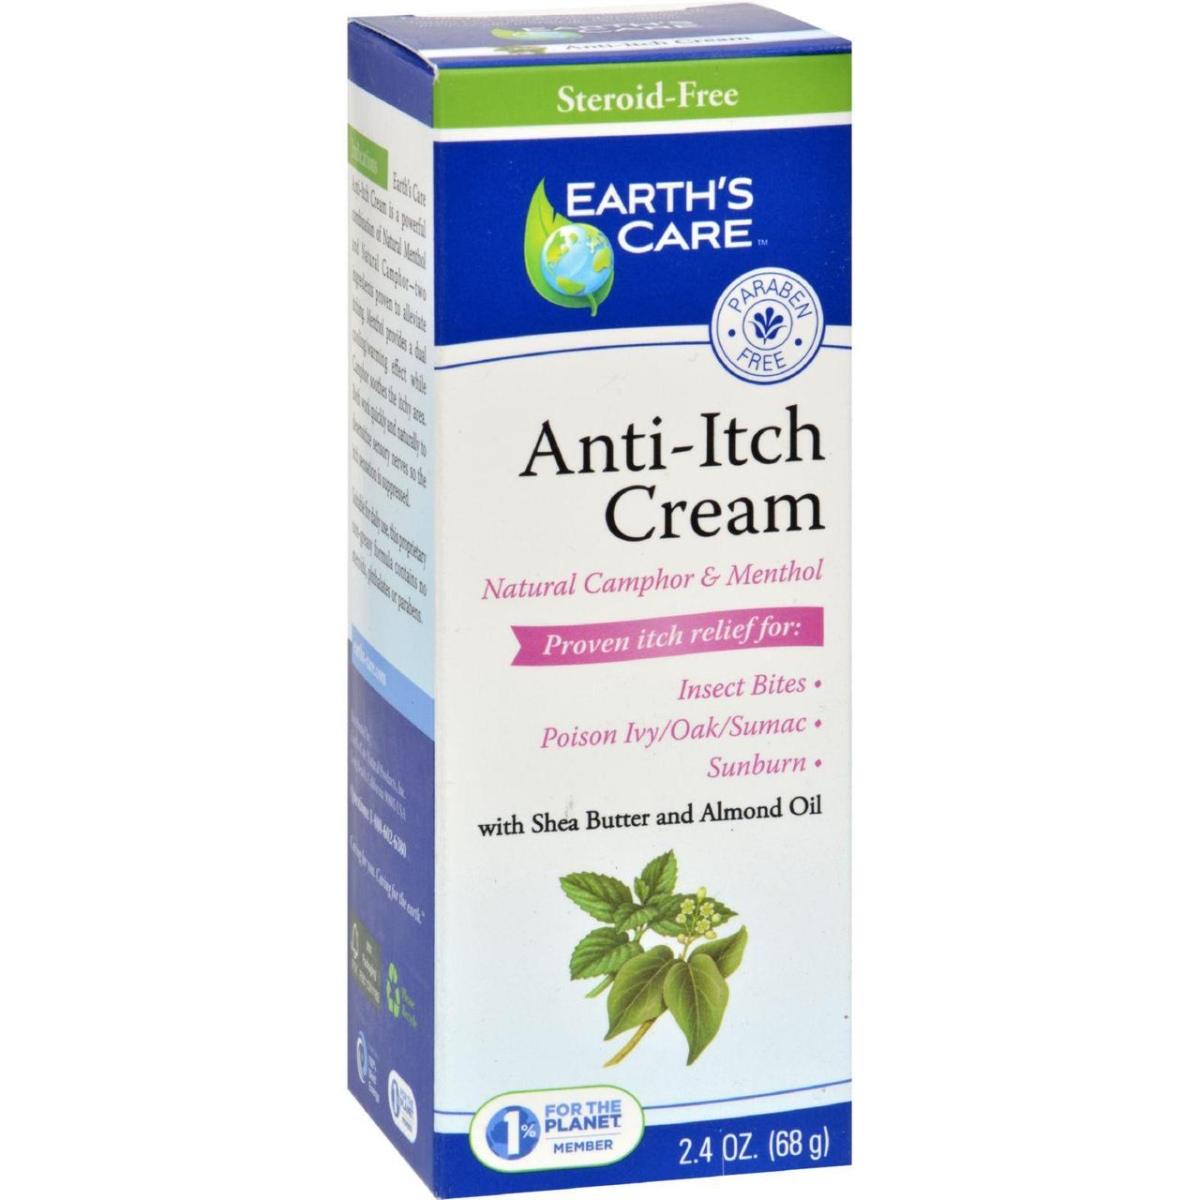 Hg1216266 2.4 Oz Anti-itch Cream